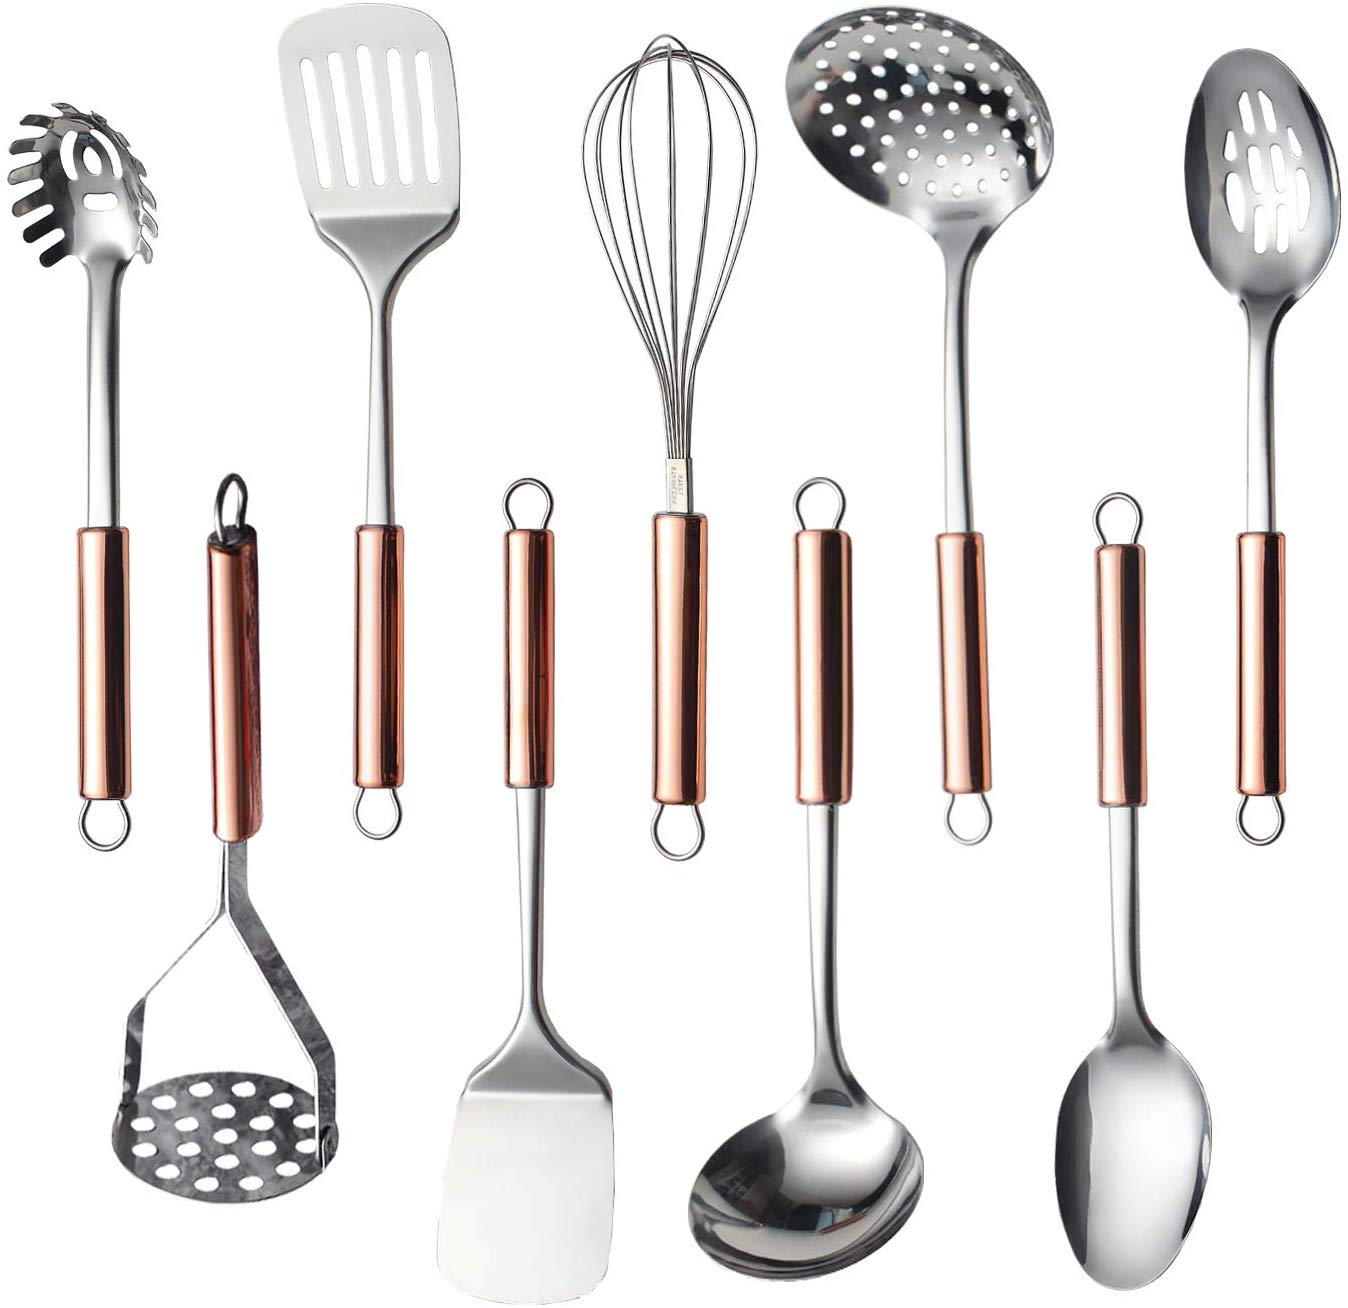 Berglander KT109 Gold Stainless steel kitchen utensils set